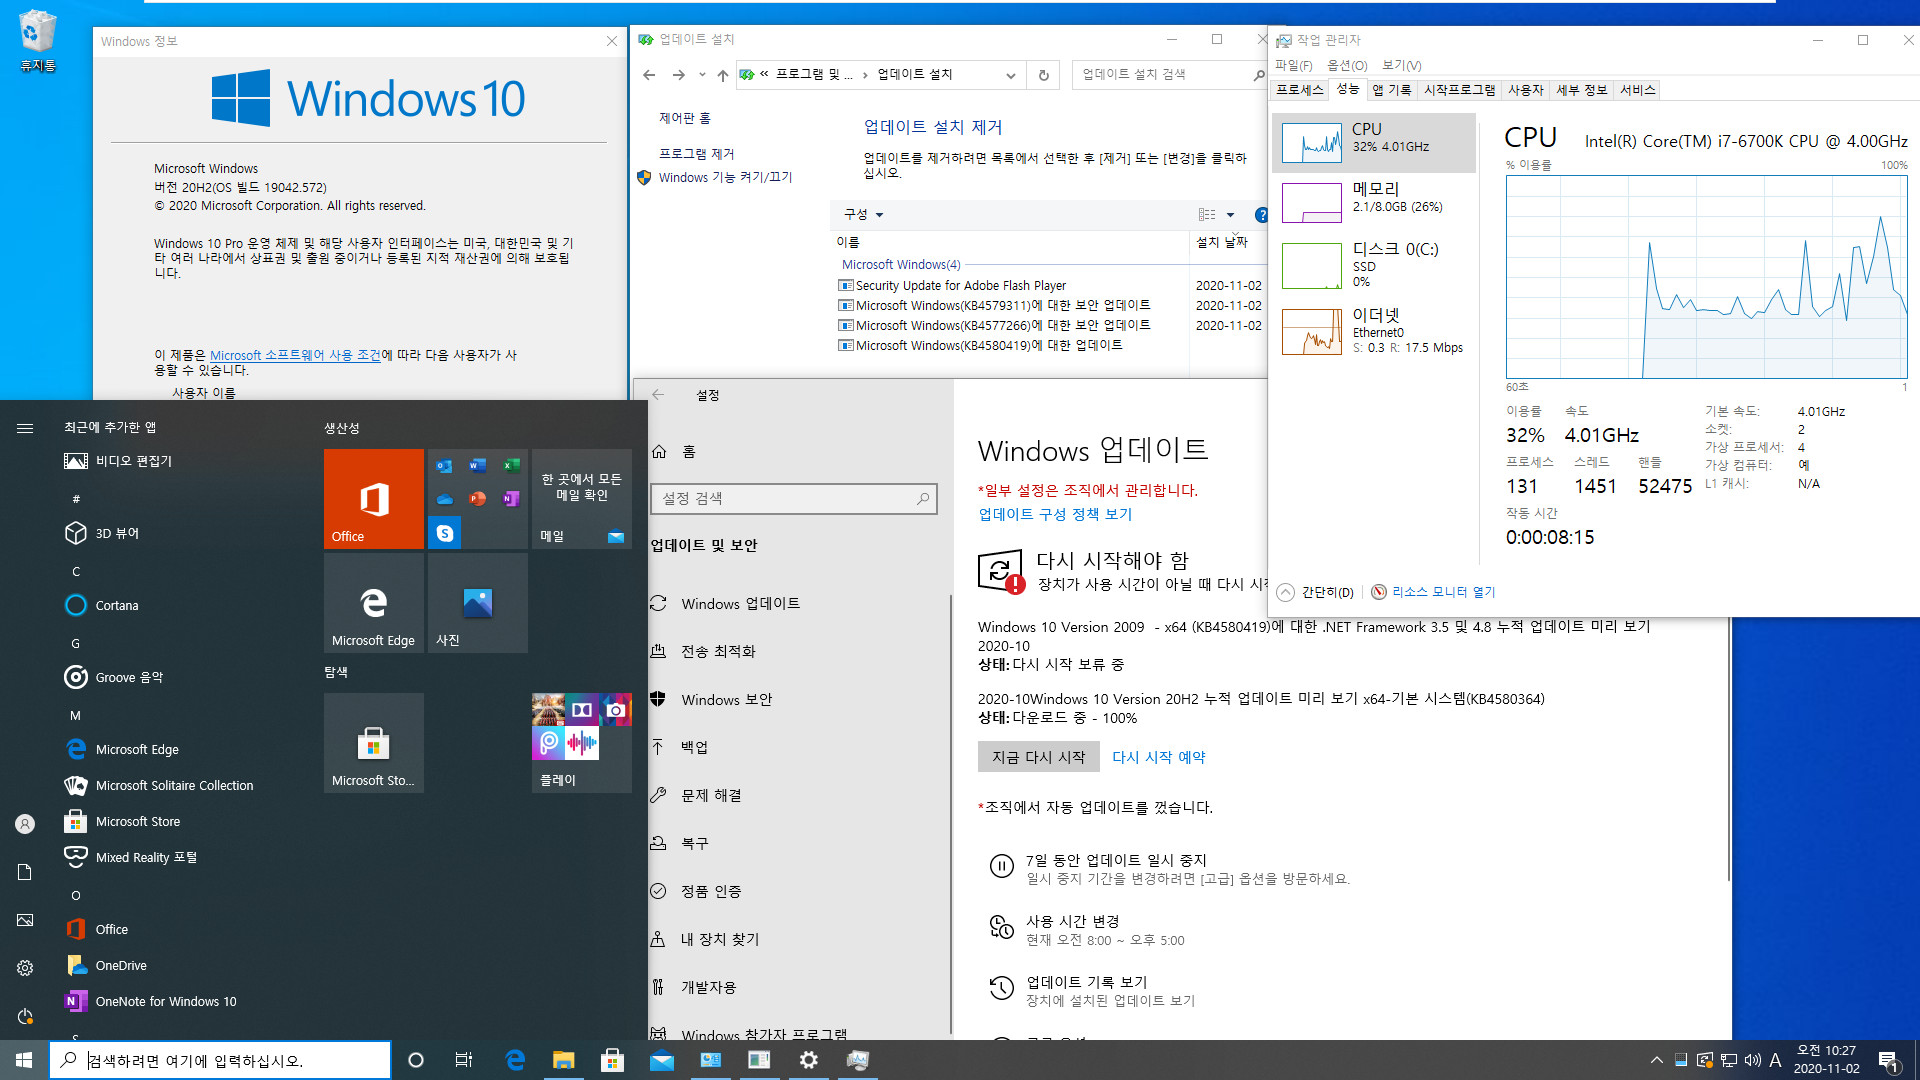 Windows 10 버전 20H2 기능 업데이트 KB4562830 폴더의 mum 파일들만 찾아서 설치하기.bat - 크로미엄 엣지 설치하지 않고 버전 20H2만 설치하기 테스트 - 뻘짓했네요 2020-11-02_102713.jpg